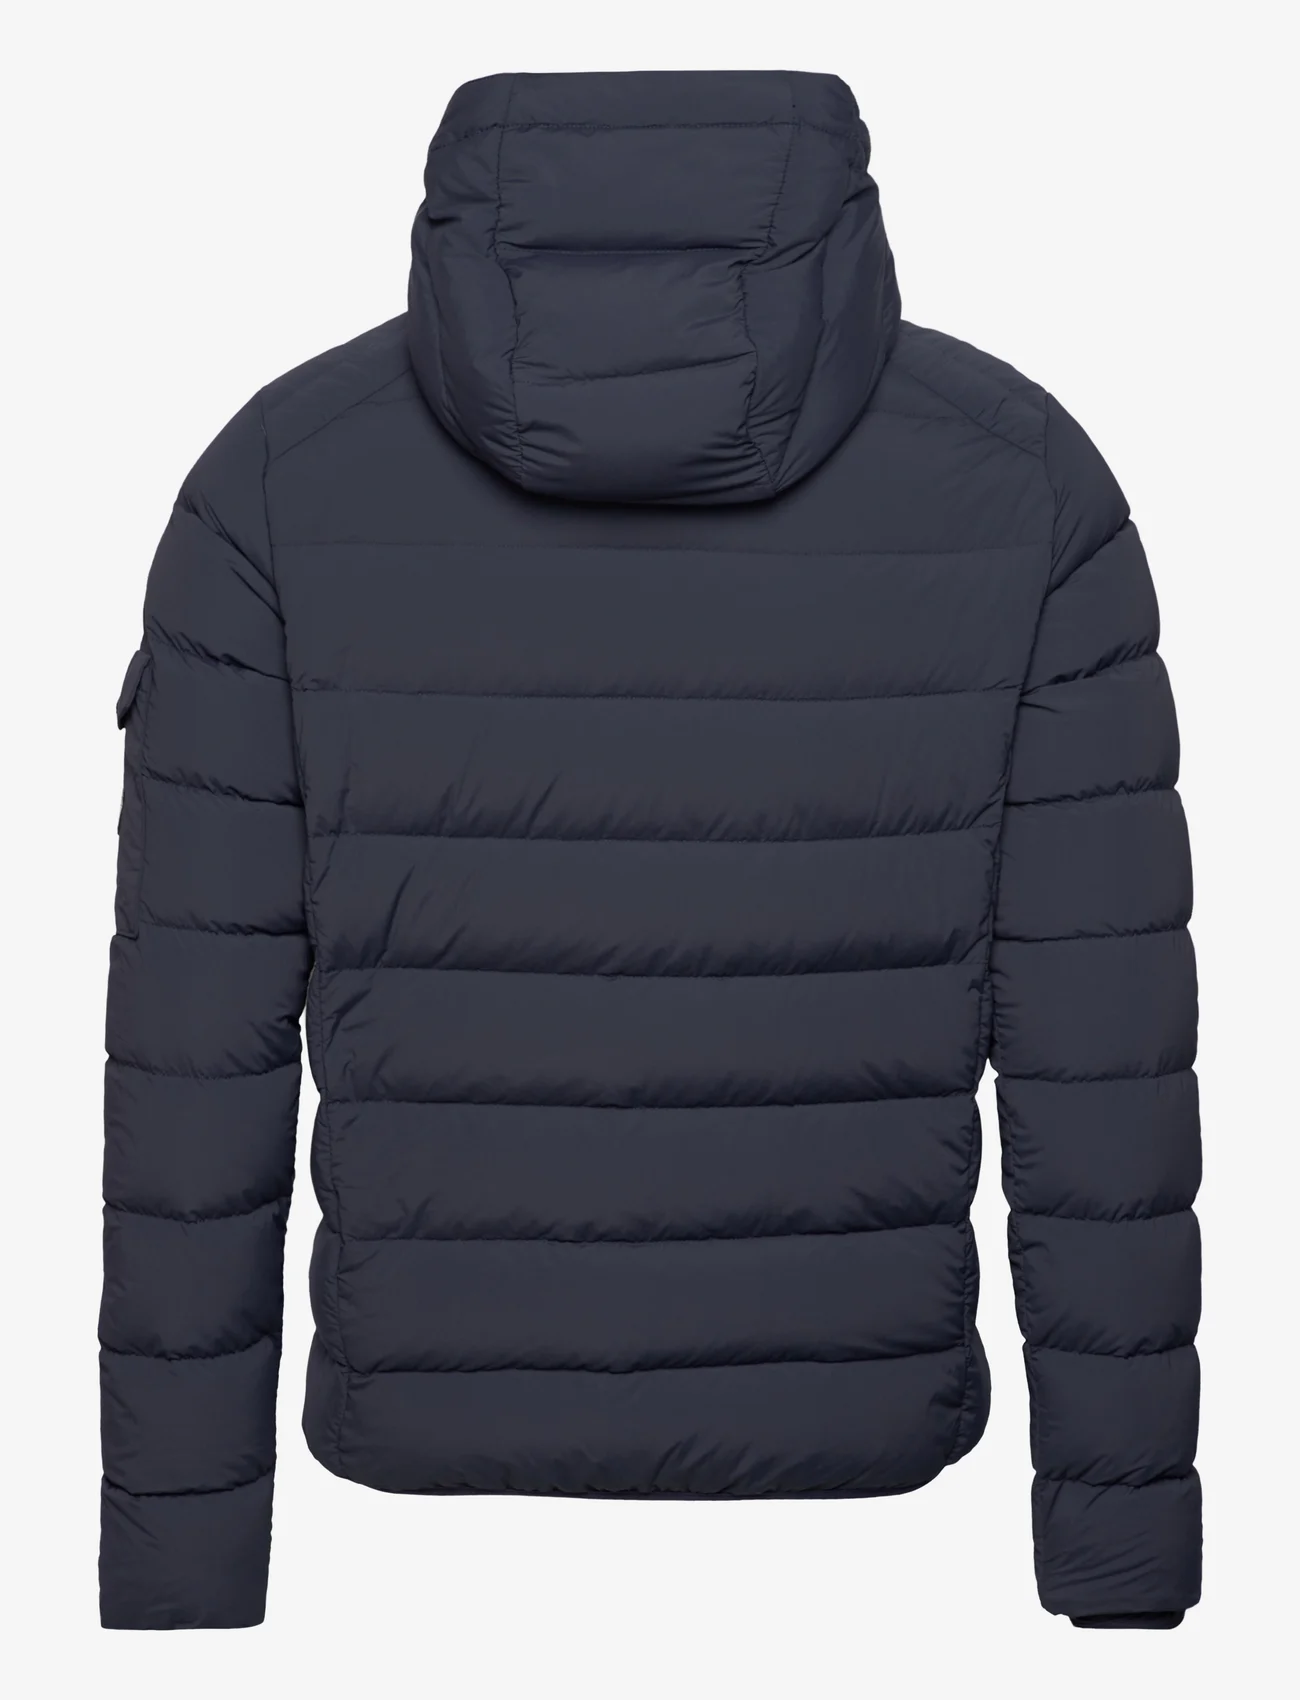 JOTT - ADRIEN - winter jackets - marine - 1